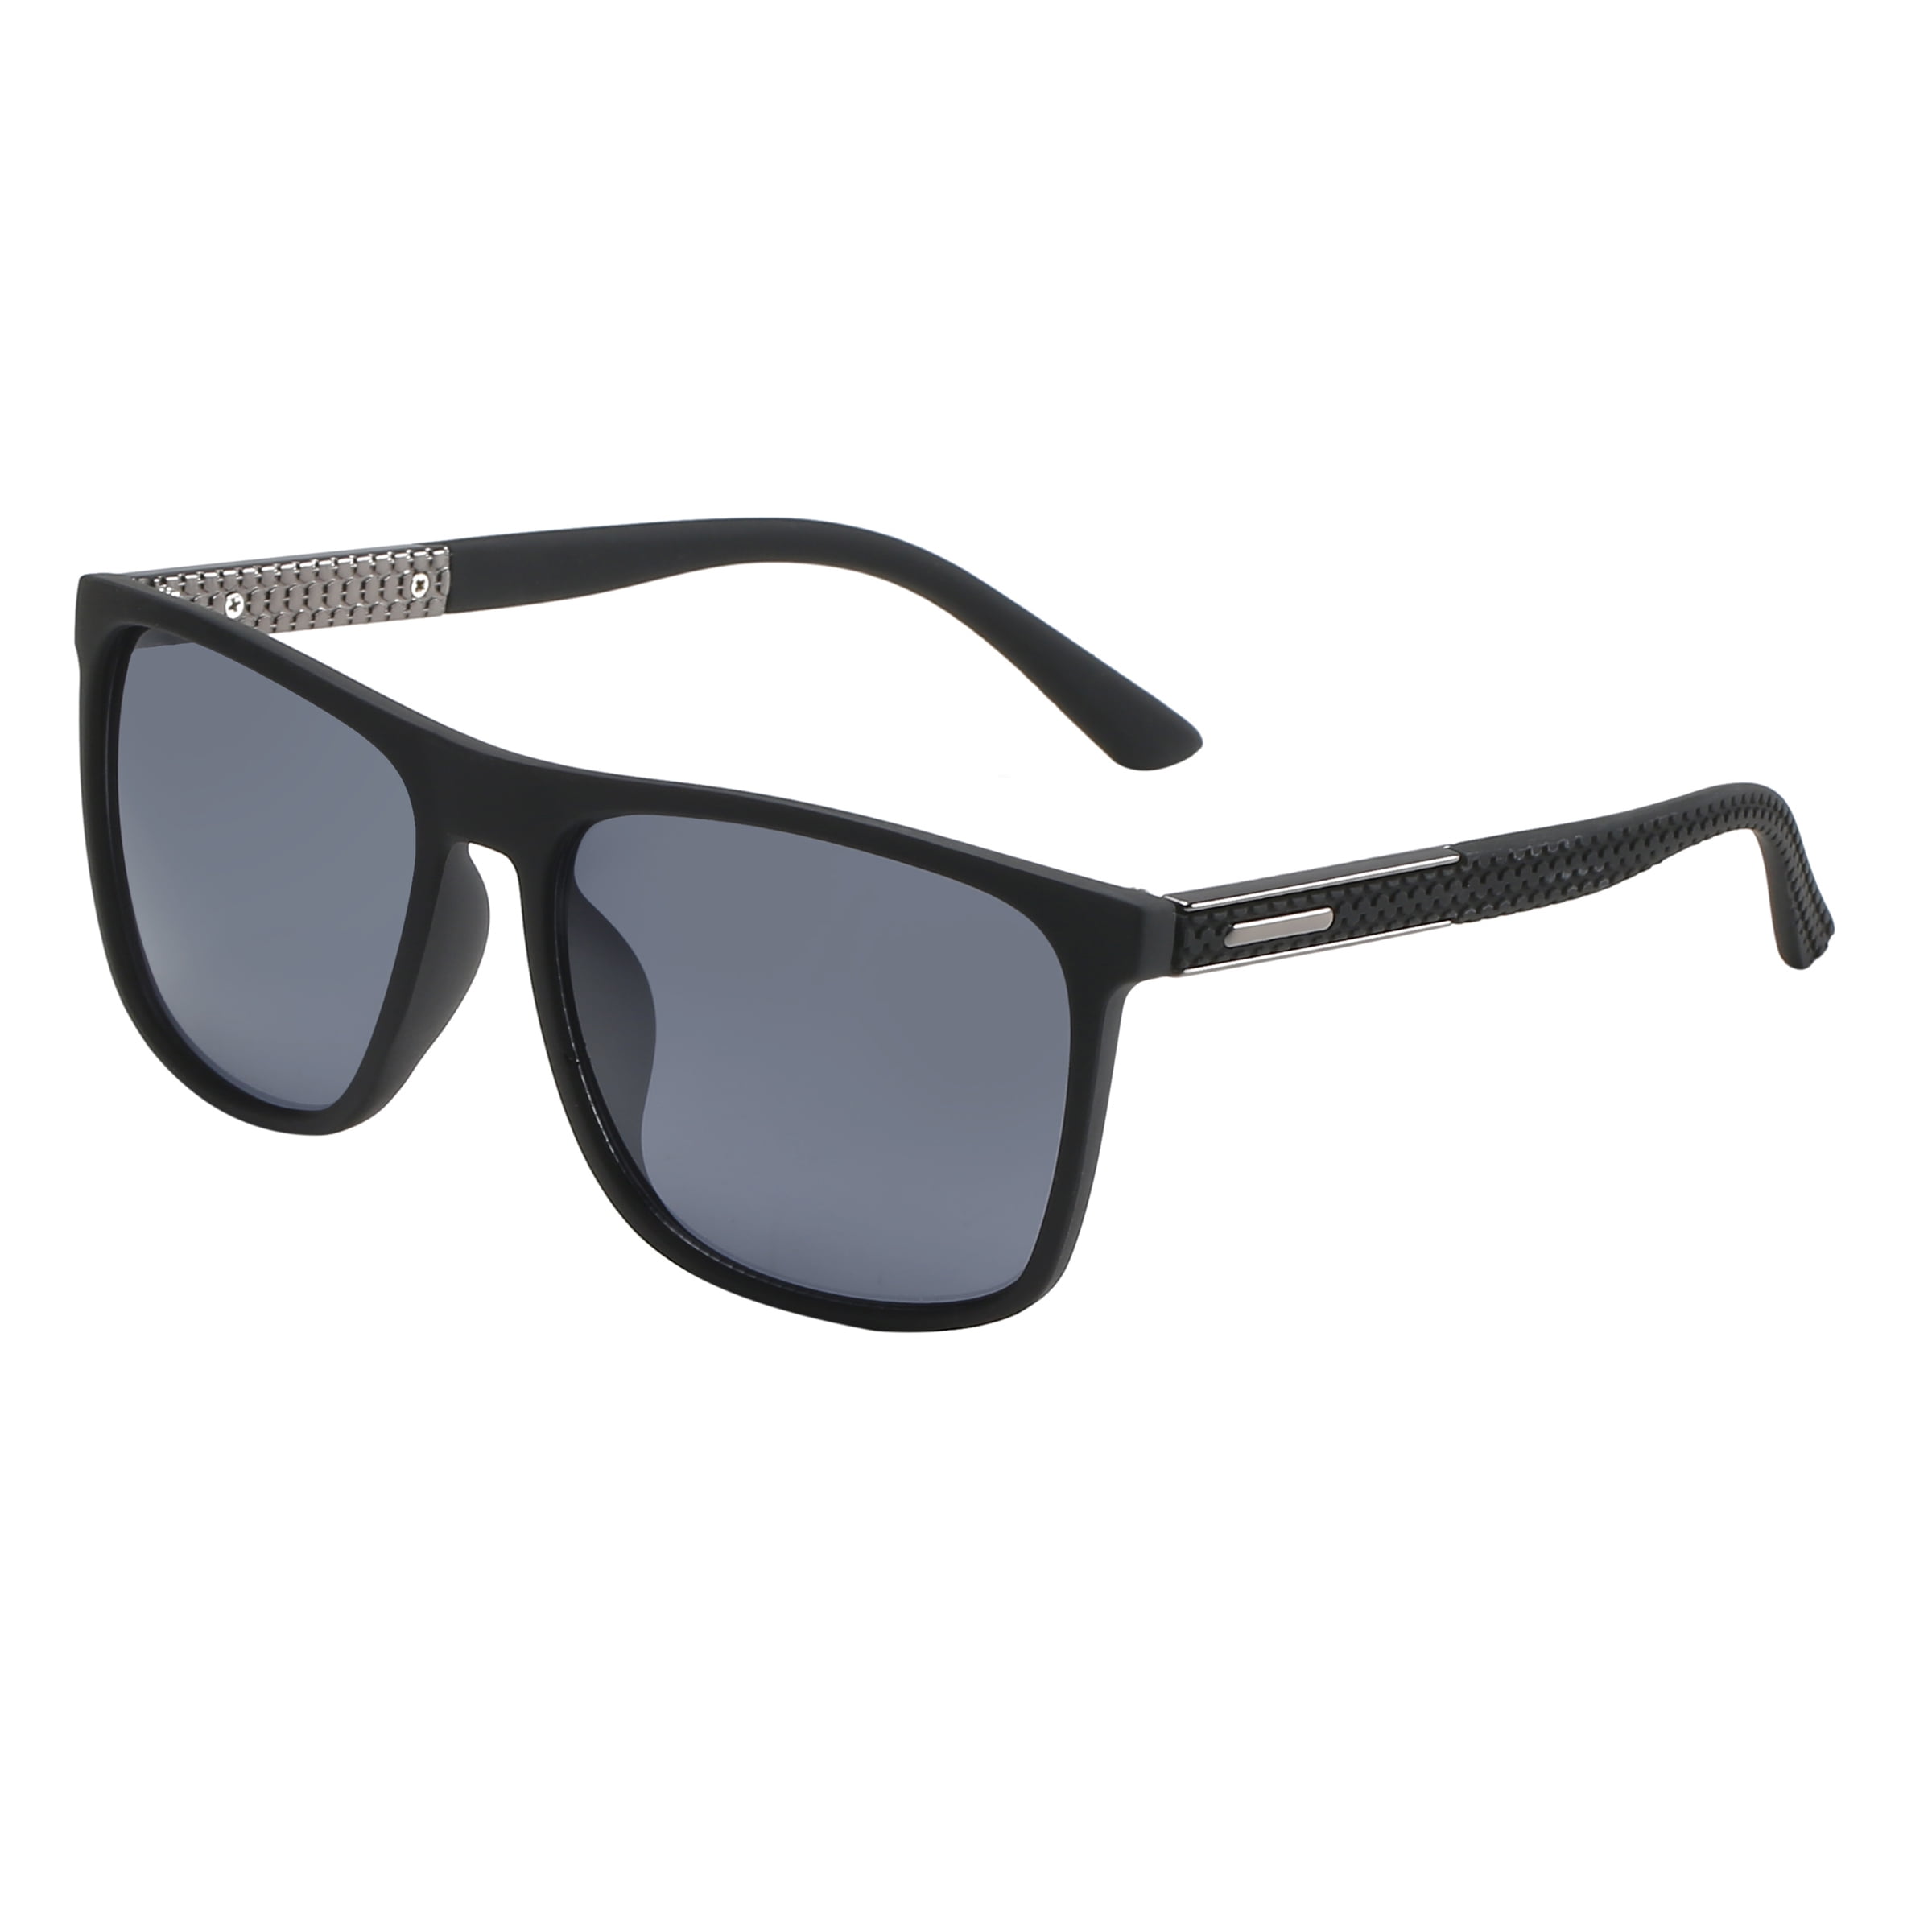 Piranha Eyewear Asher Classic Square Black Sunglasses with Smoke